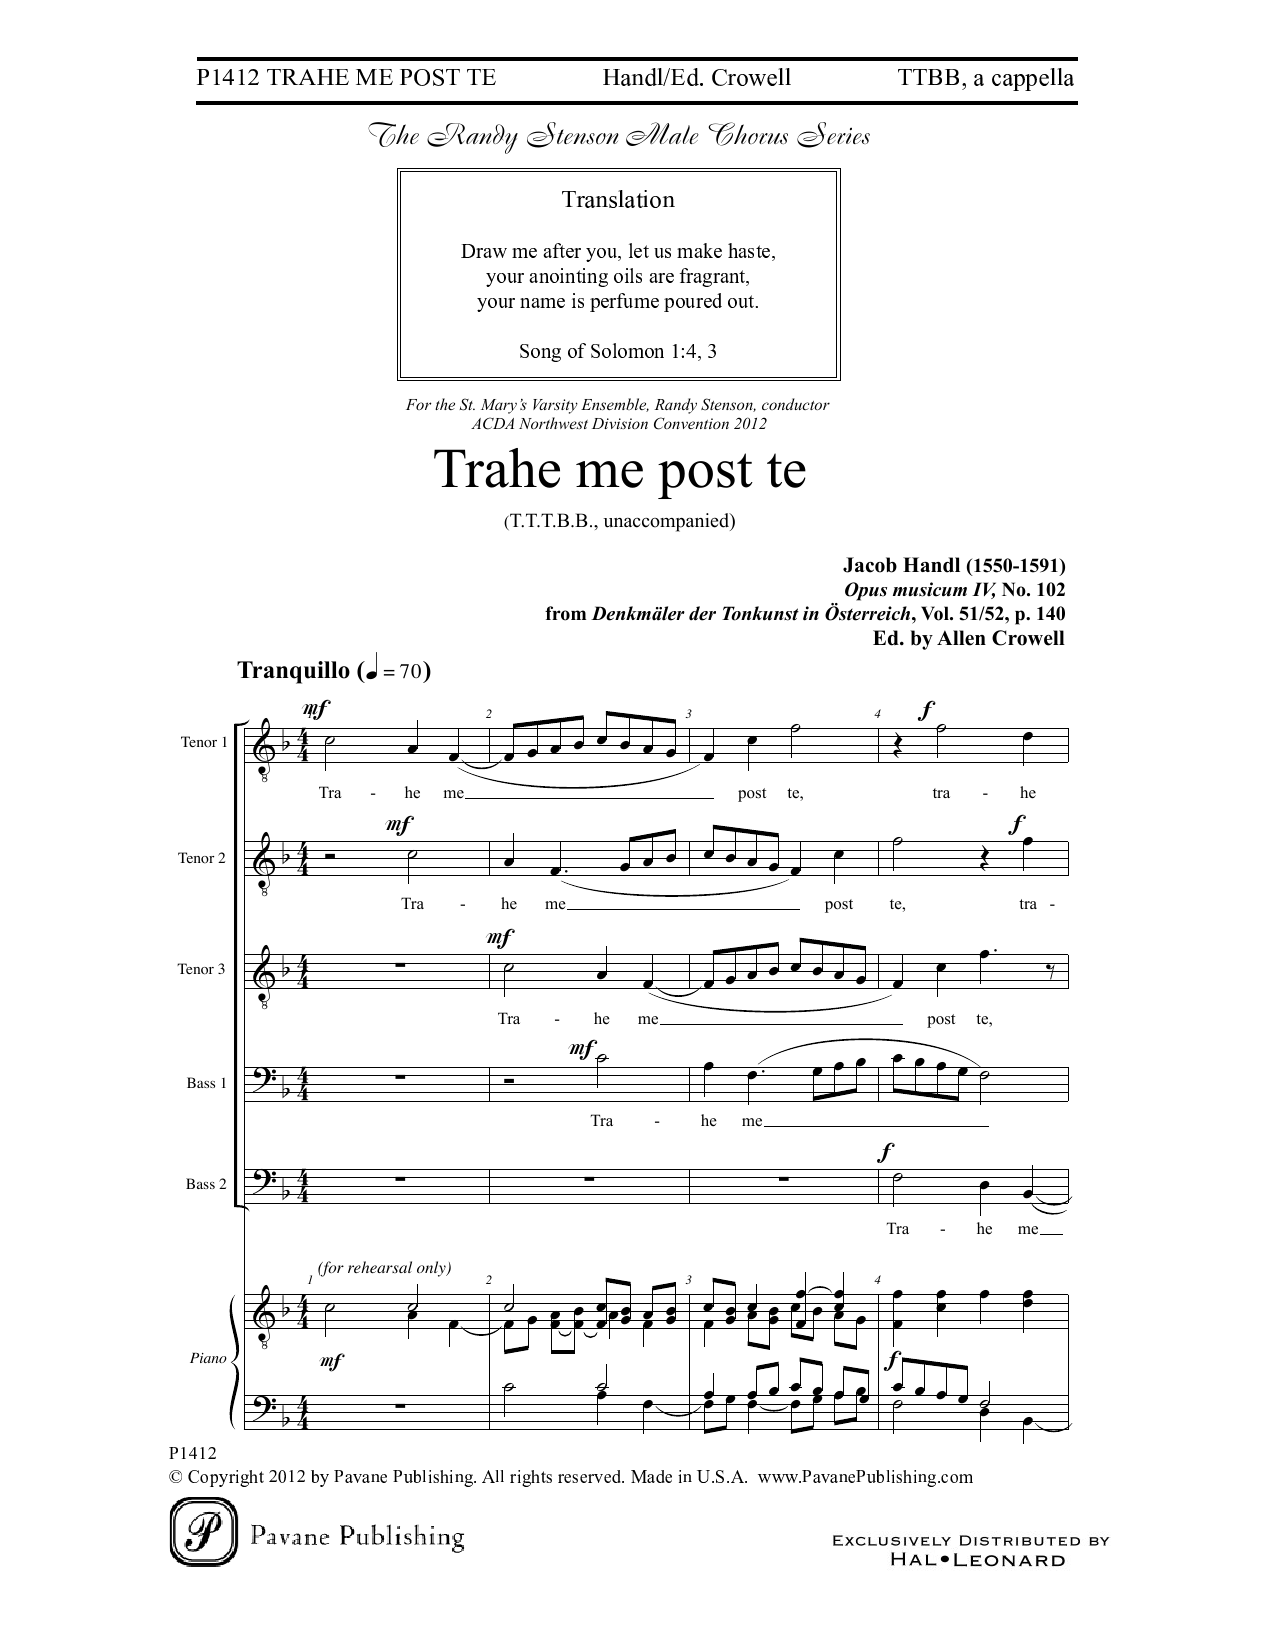 Jacob Handl Trahe me post te Sheet Music Notes & Chords for Choral - Download or Print PDF